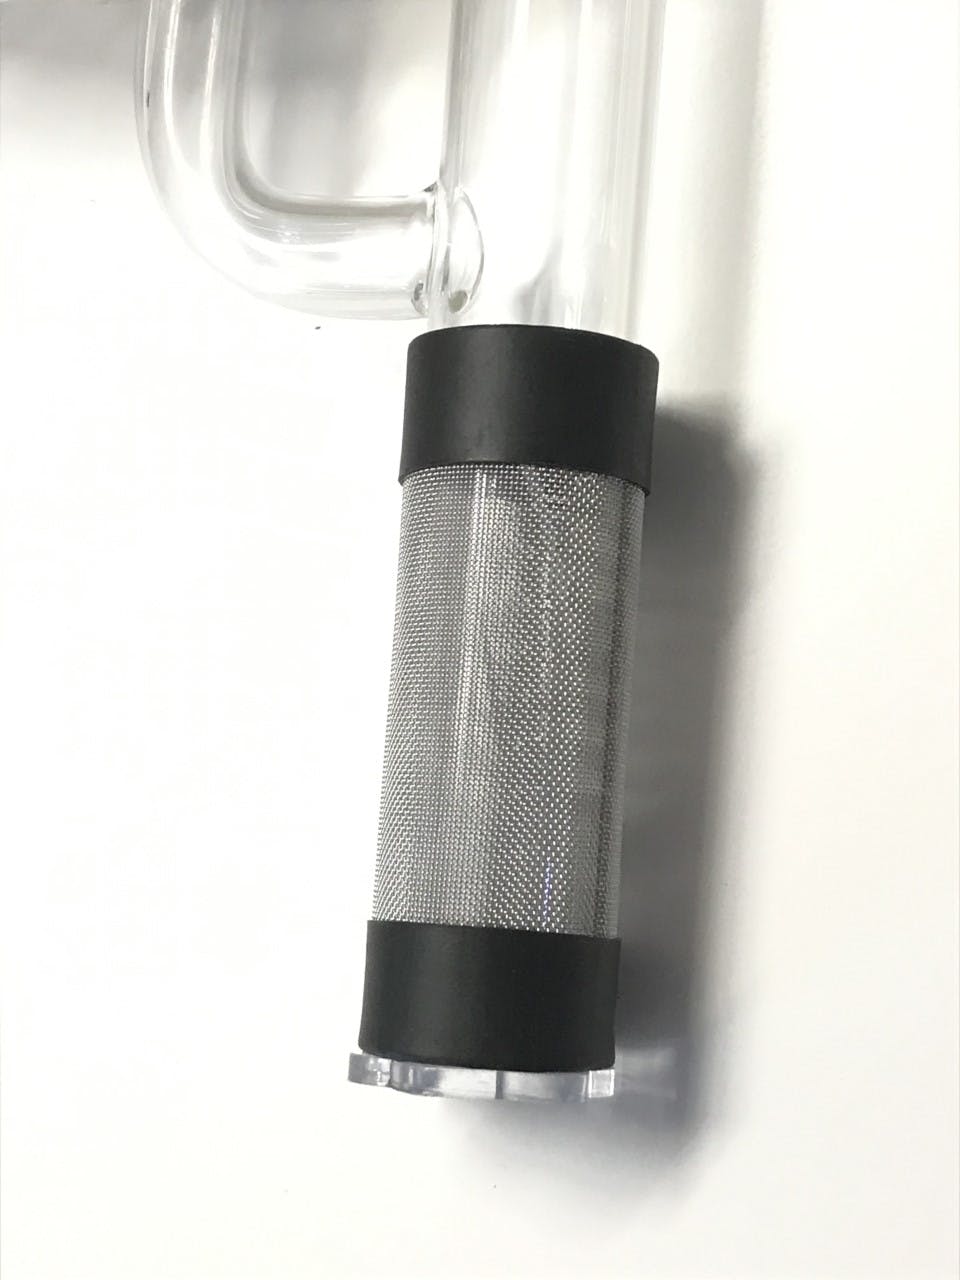 Lily pipe glas med ytavskimning